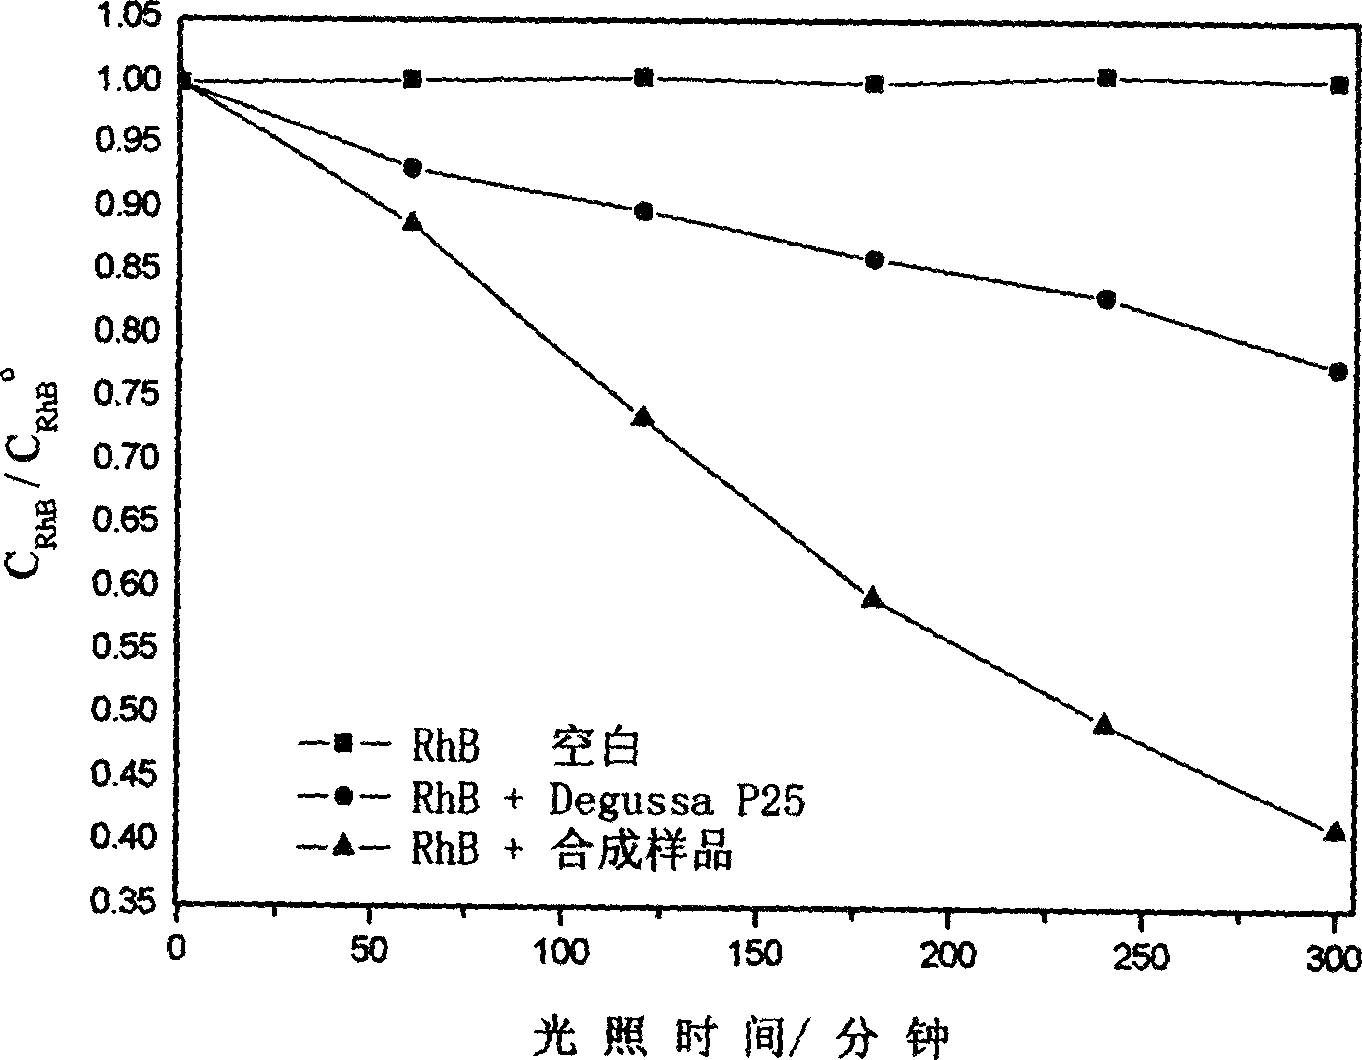 Low temperature process of preparing carbon-doped mesoporous TiO2 visible light catalyst